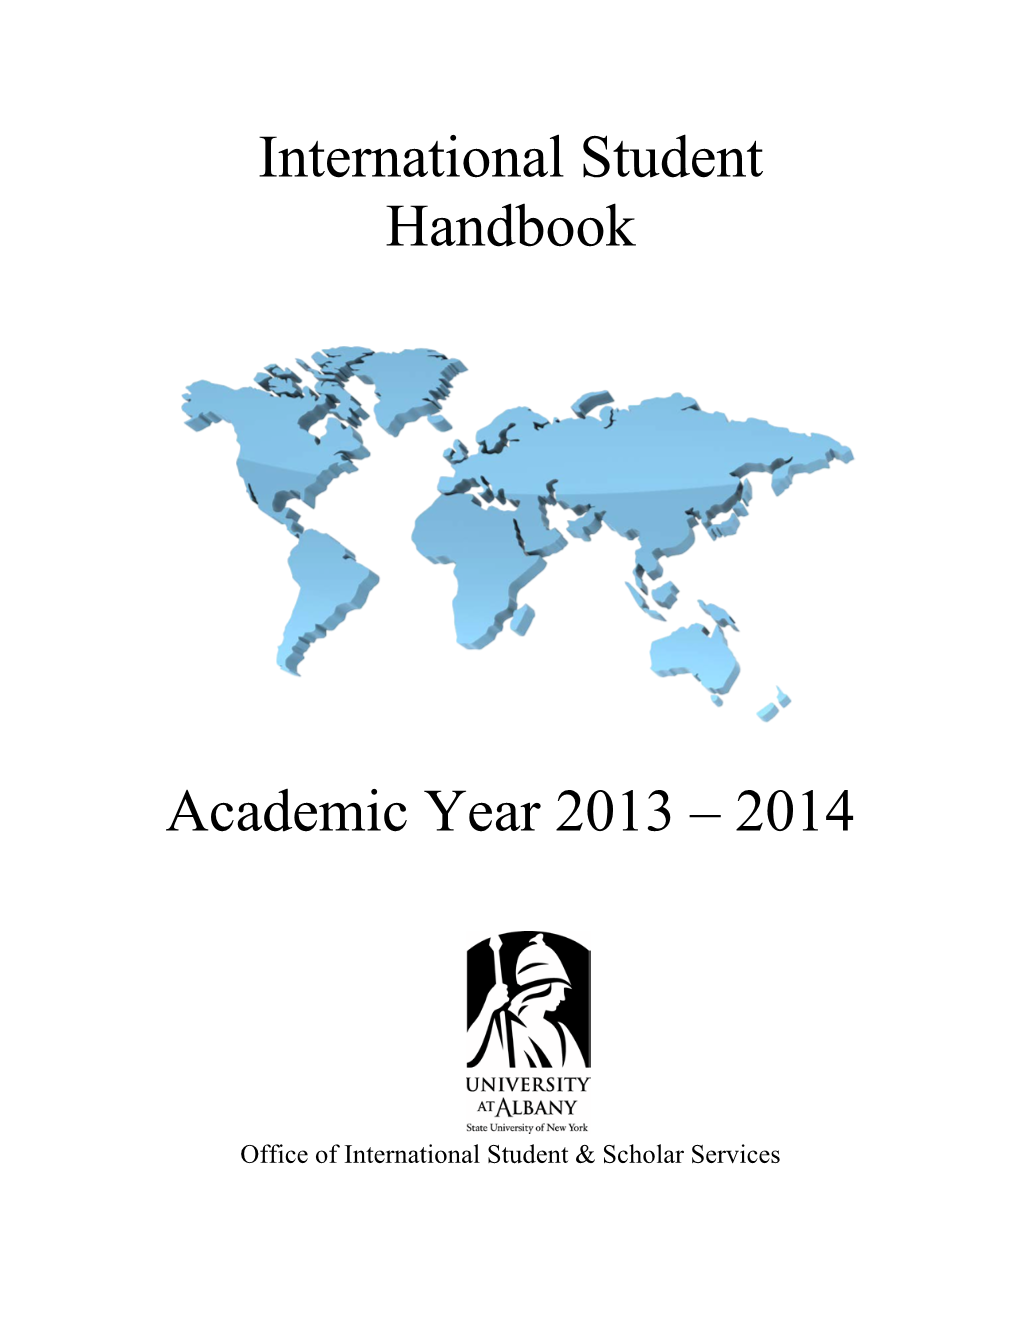 International Student Handbook Academic Year 2013 – 2014